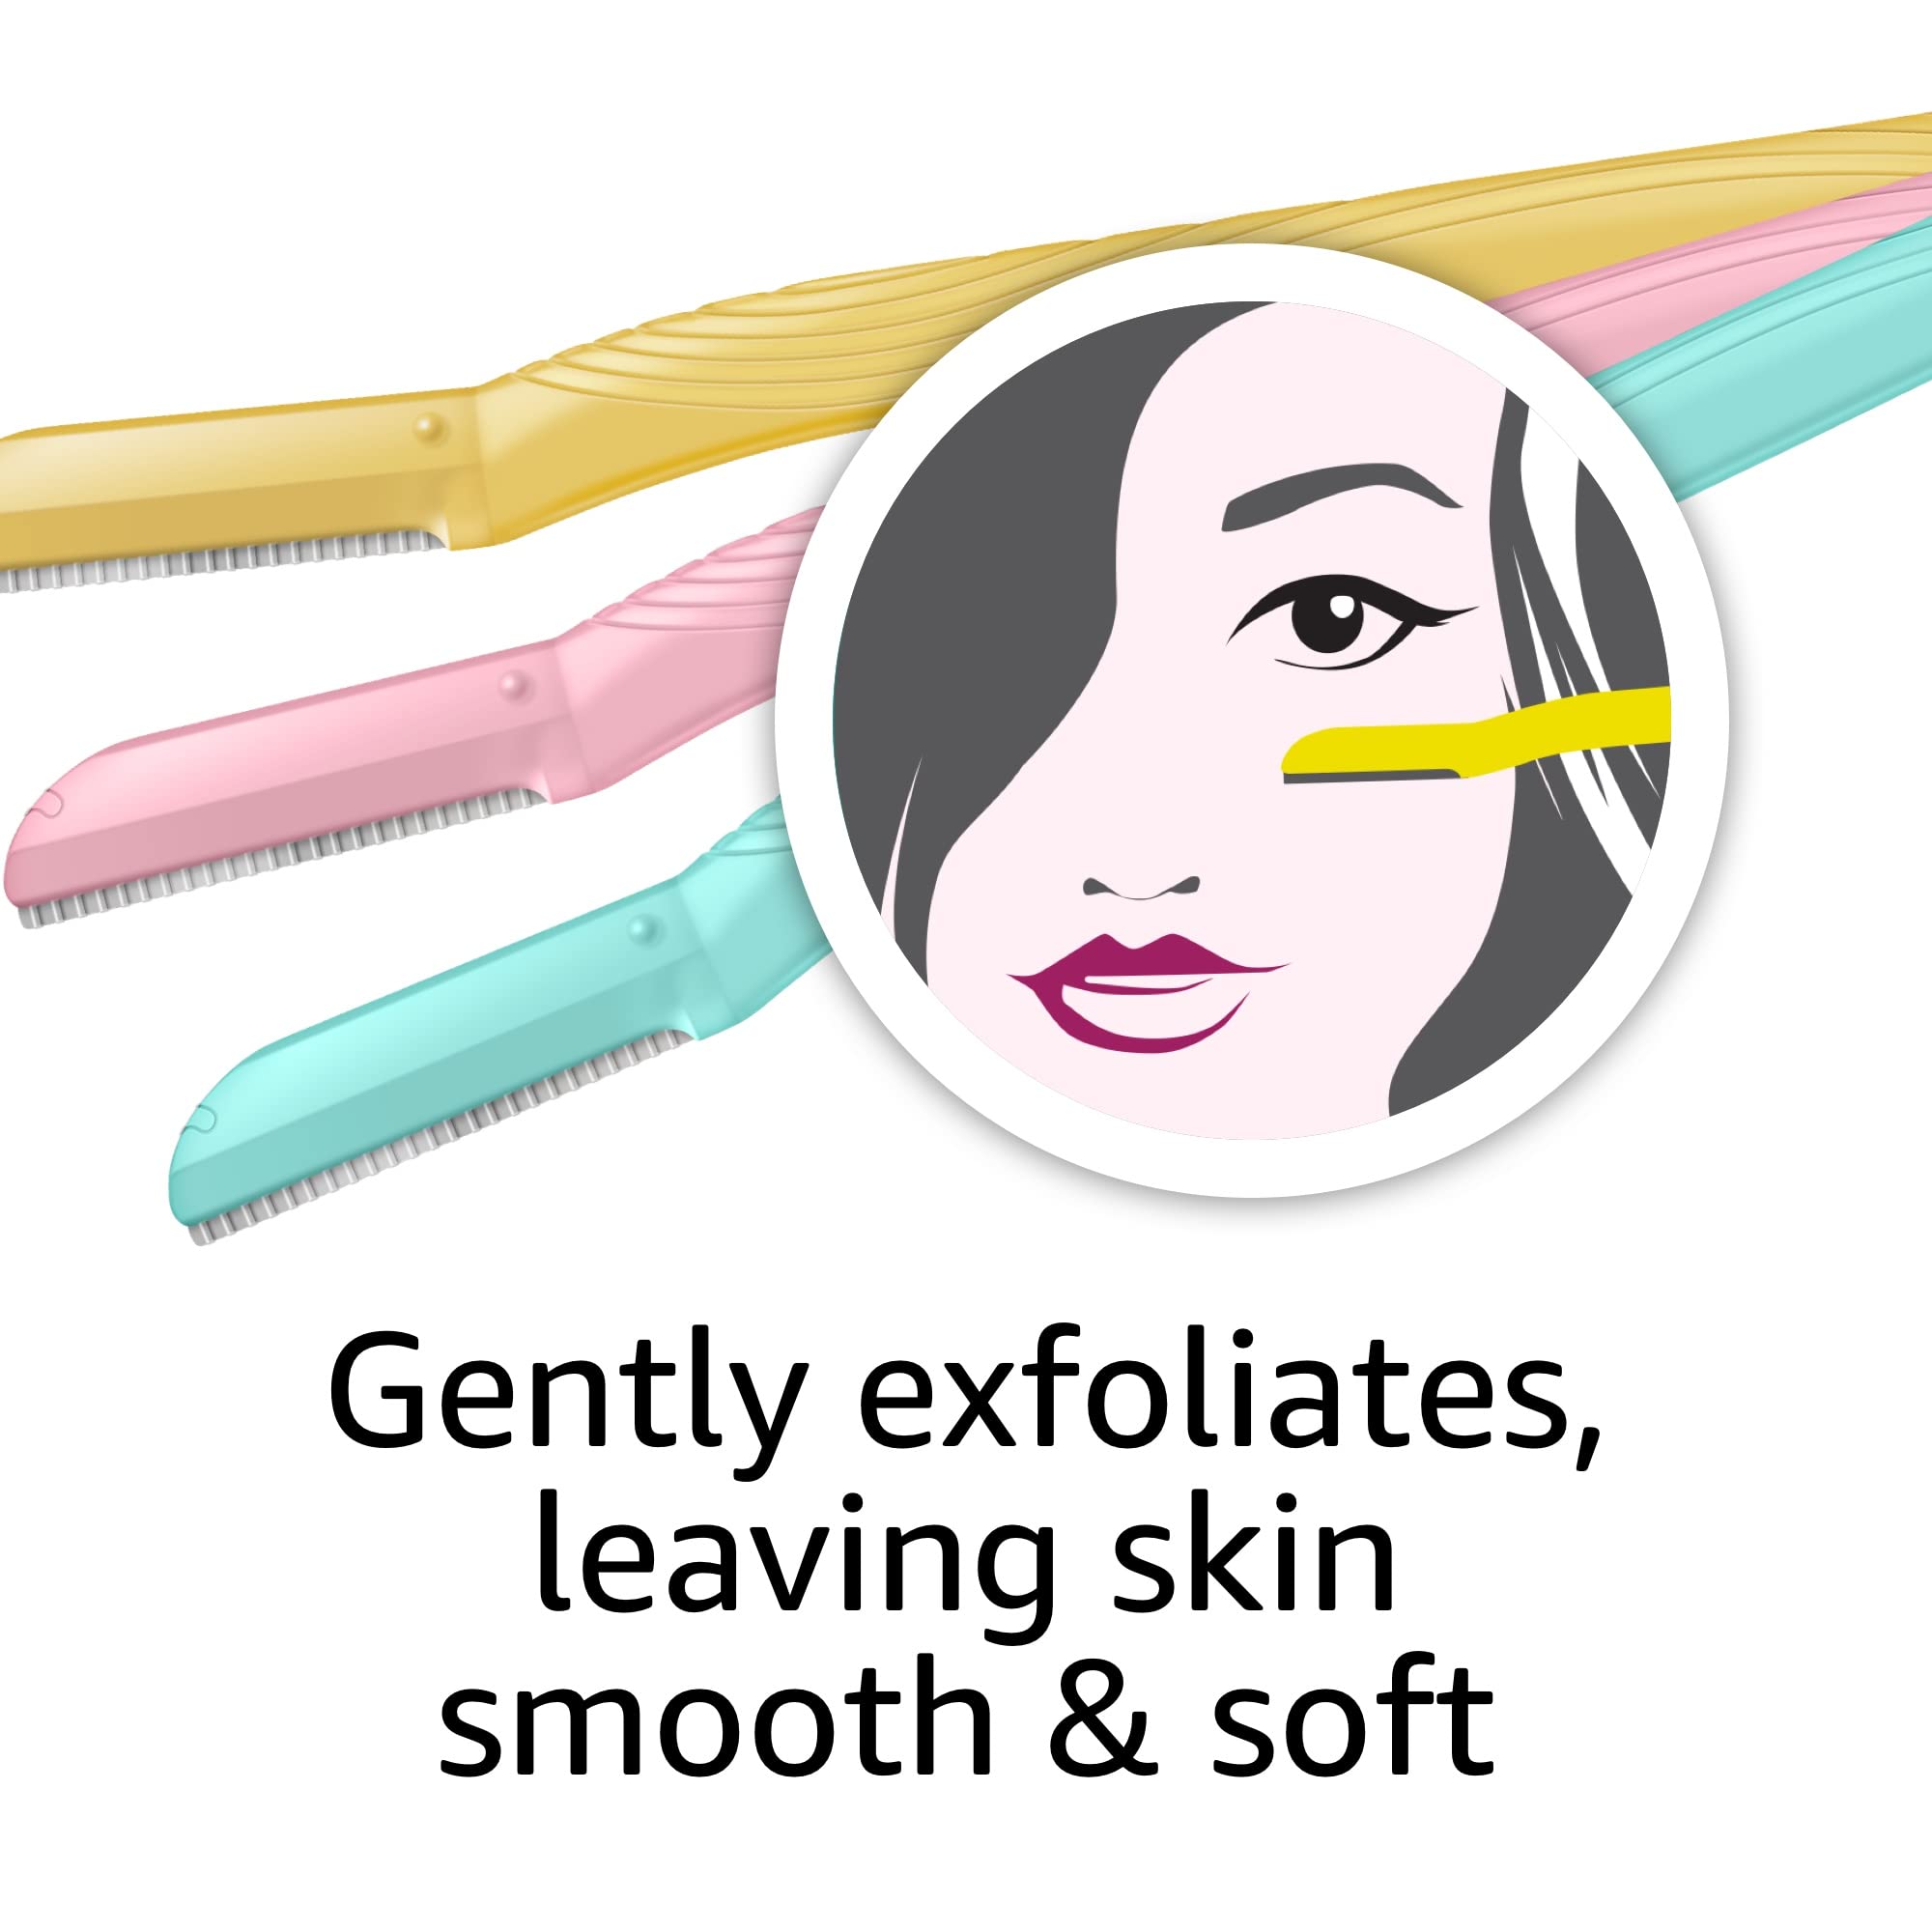 Amazon Basics Women's Multipurpose Exfoliating Dermaplaning Tool, Eyebrow Razor, and Facial Razor, Includes Blade Cover, Multicolor, 3 Count